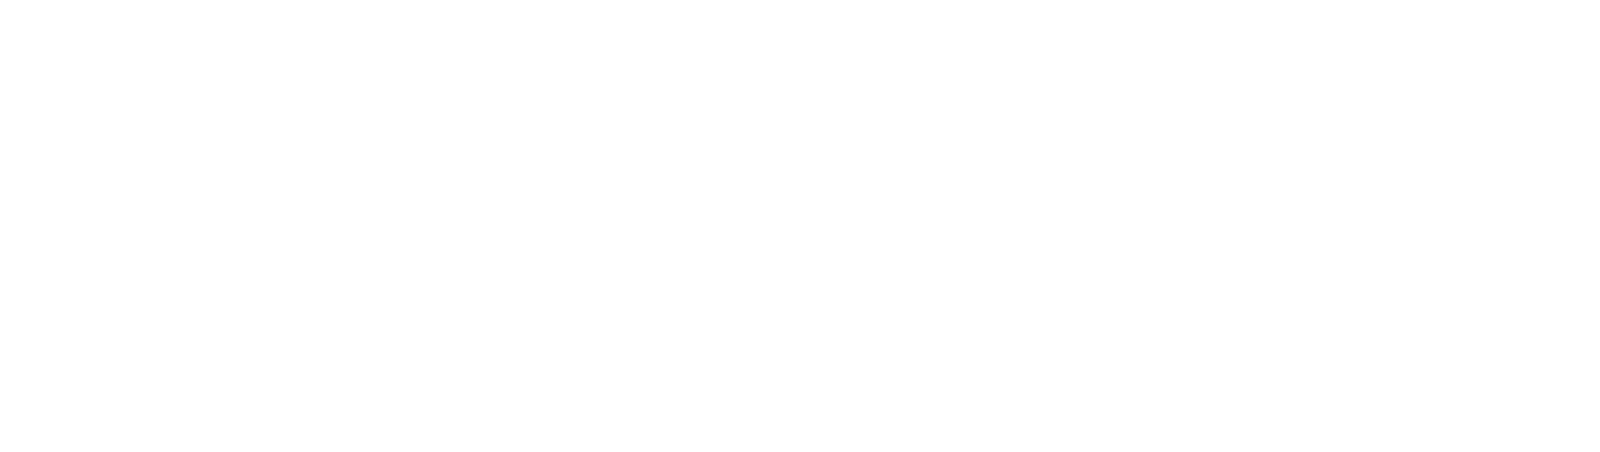 Forbes BD Logo